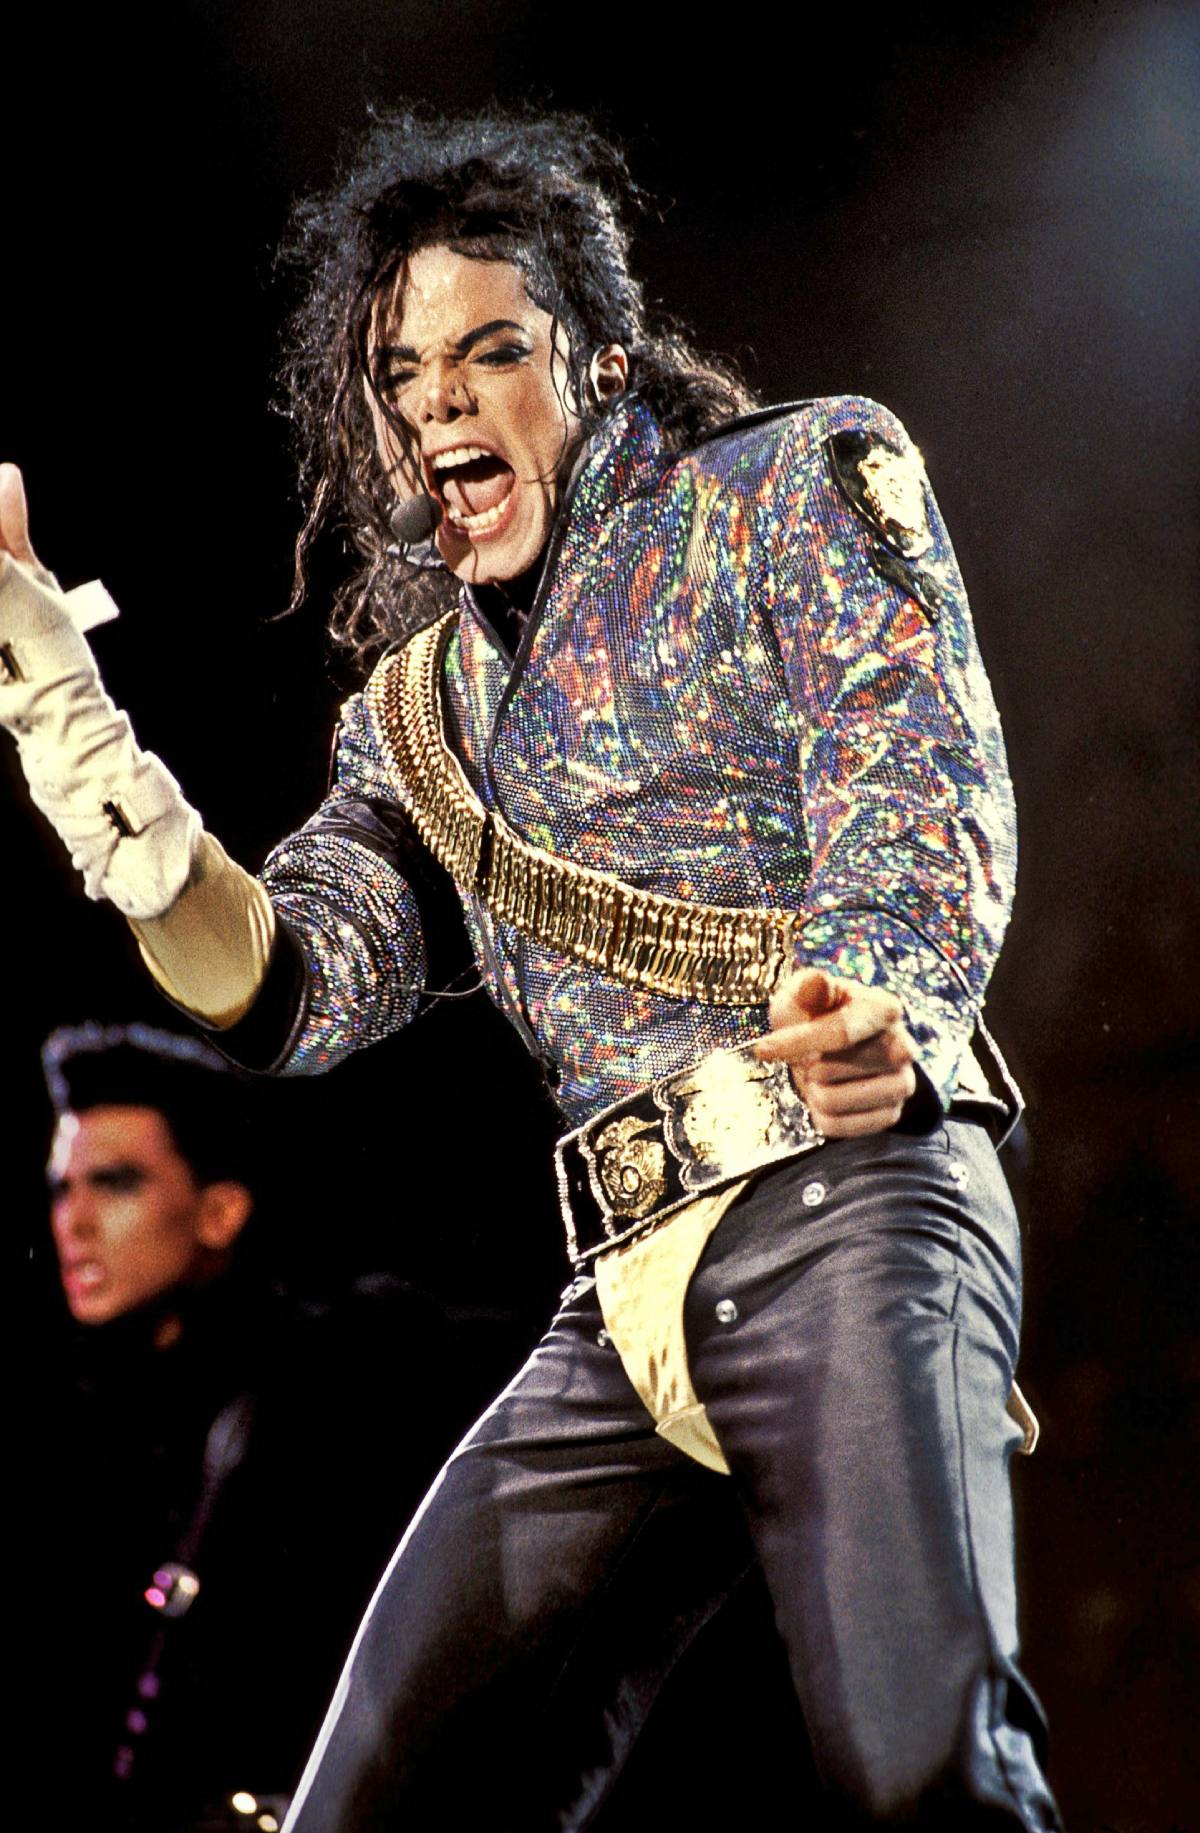 Der "King of Pop" Michael Jackson!